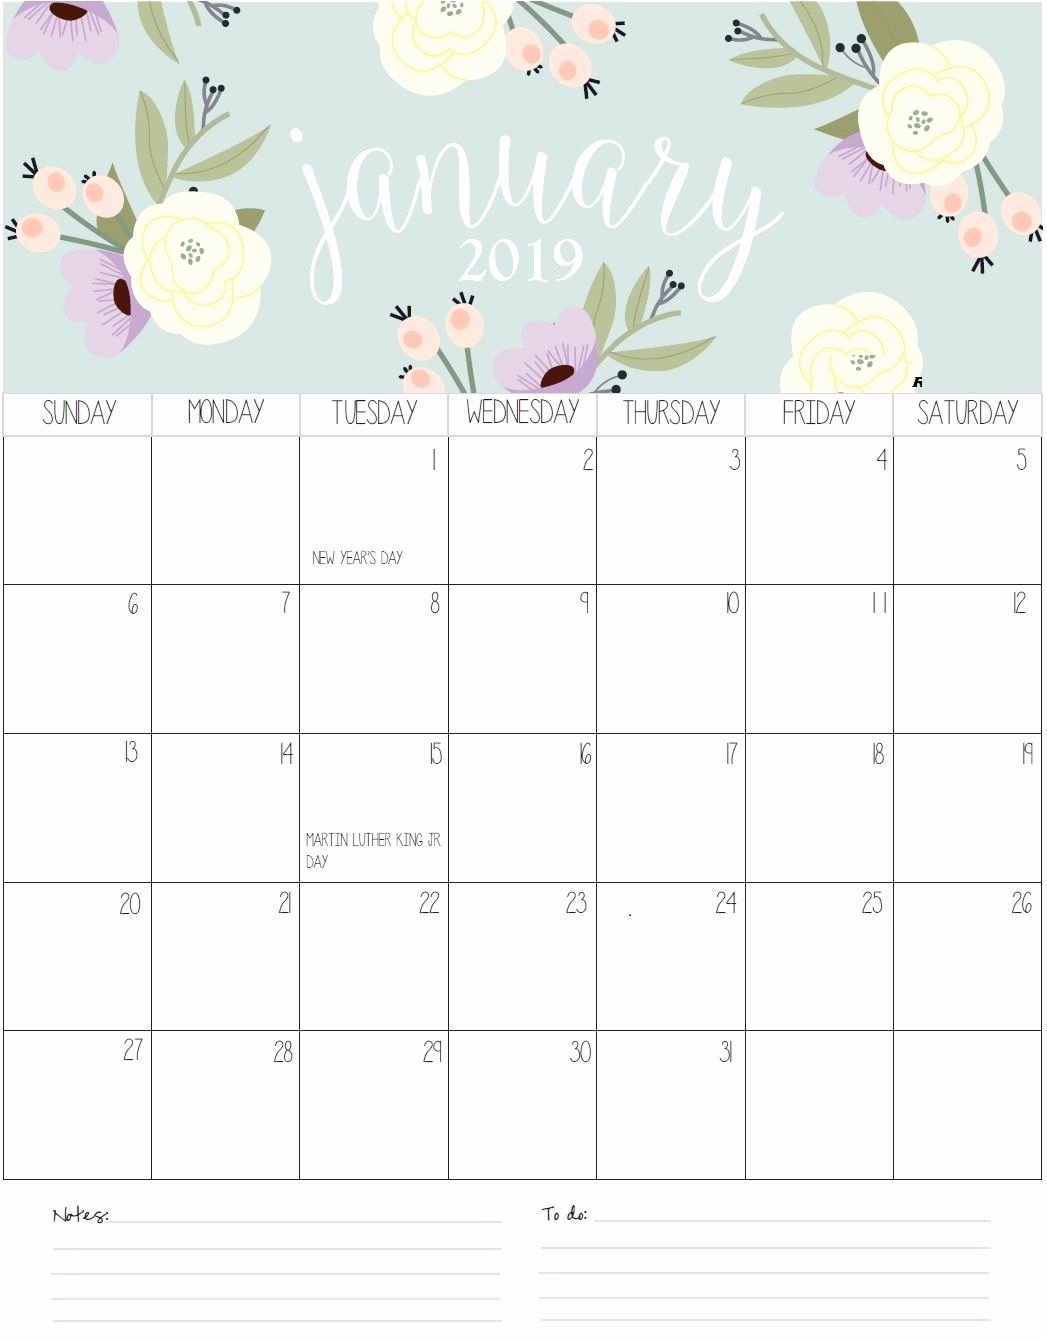 cute calendar template 2019 inspirational january monthly calendar 2019 organize of cute calendar template 2019